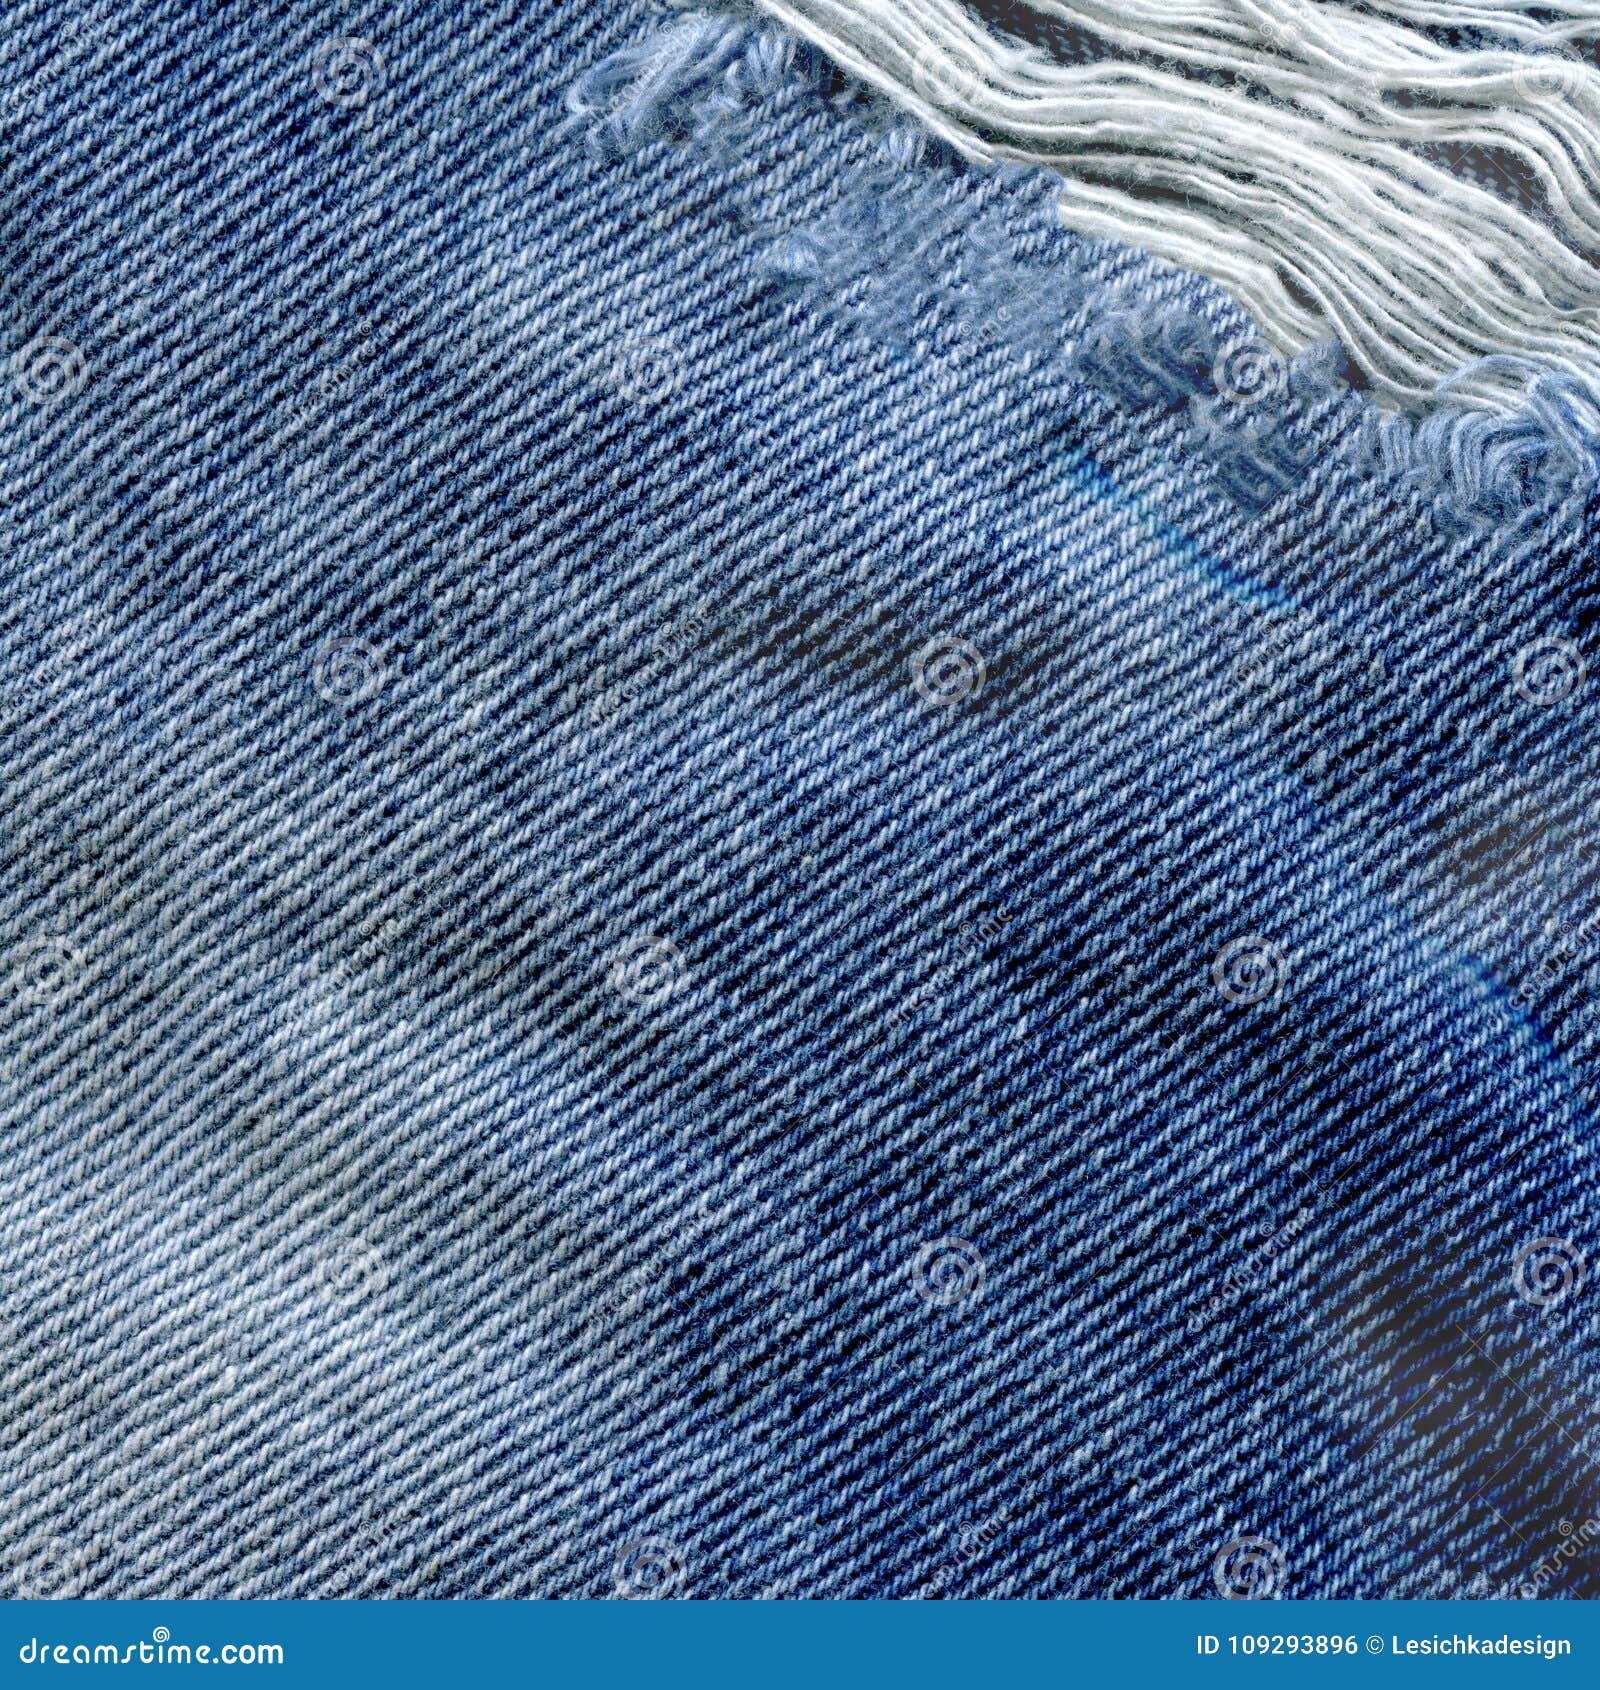 Closeup View Blue Natural Clean Denim Texture. Stock Photo - Image of ...